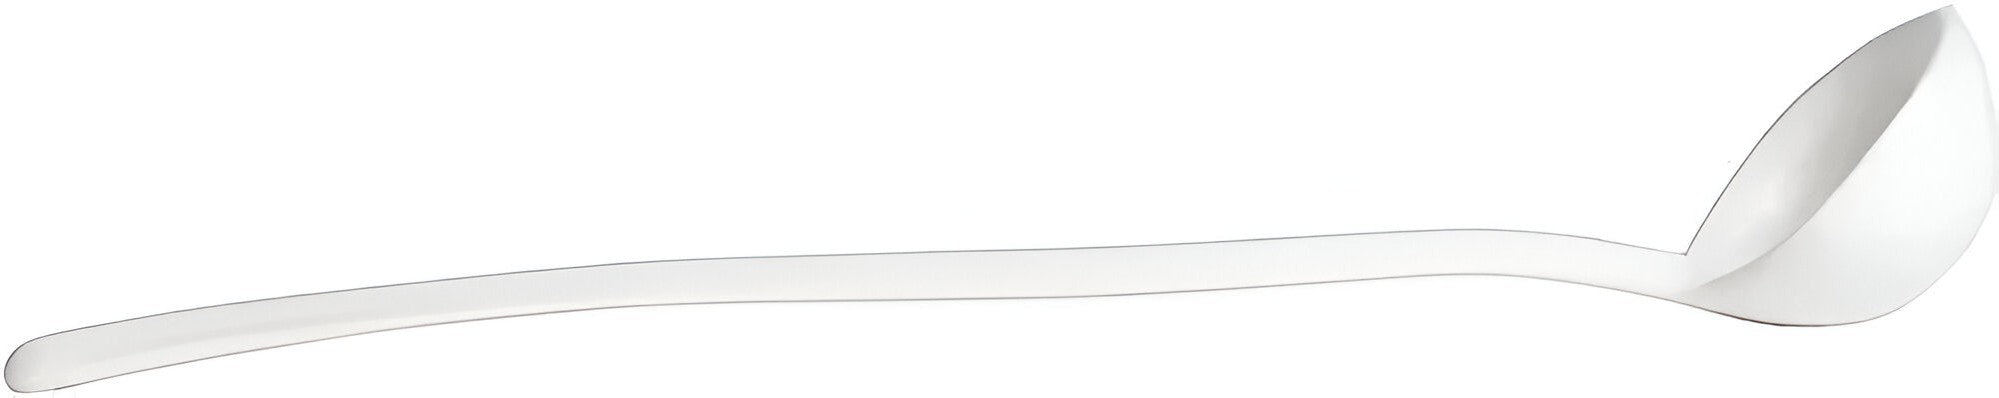 Bugambilia - Mod 1.69 Oz Medium White Fiji Ladle With Glossy Smooth Finish - SD012-MOD-WW